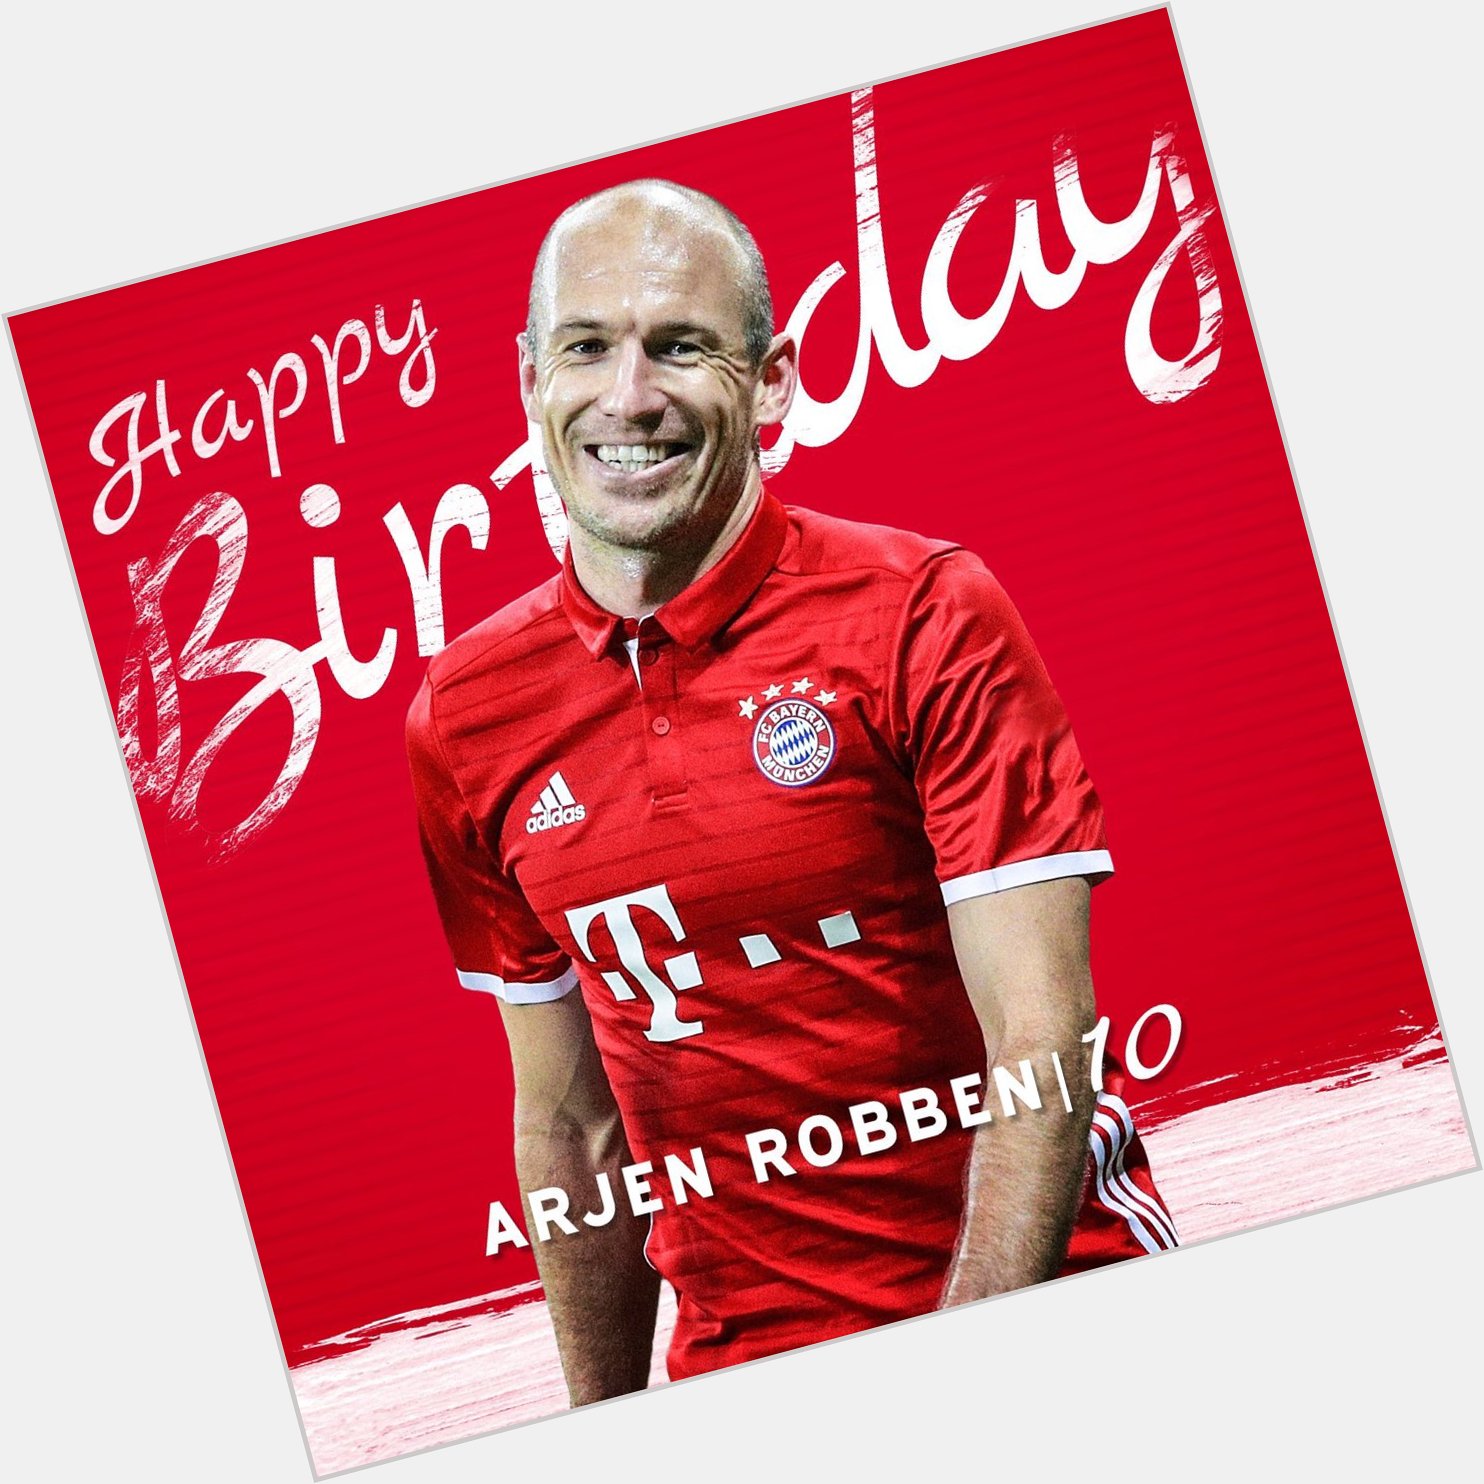 Happy Birthday | Feliz Cumpleaños: Arjen Robben!  